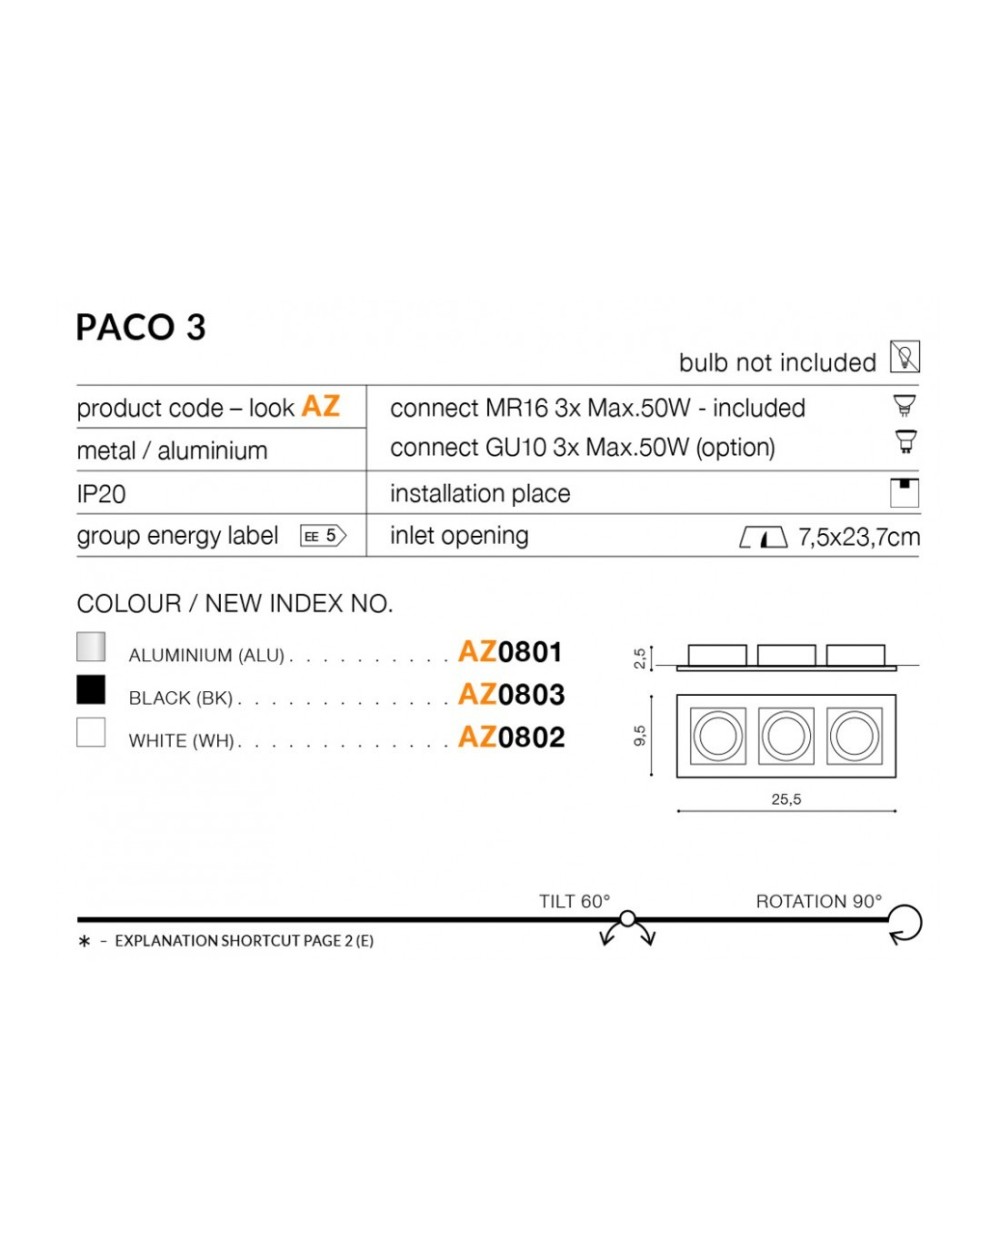 Paco 3